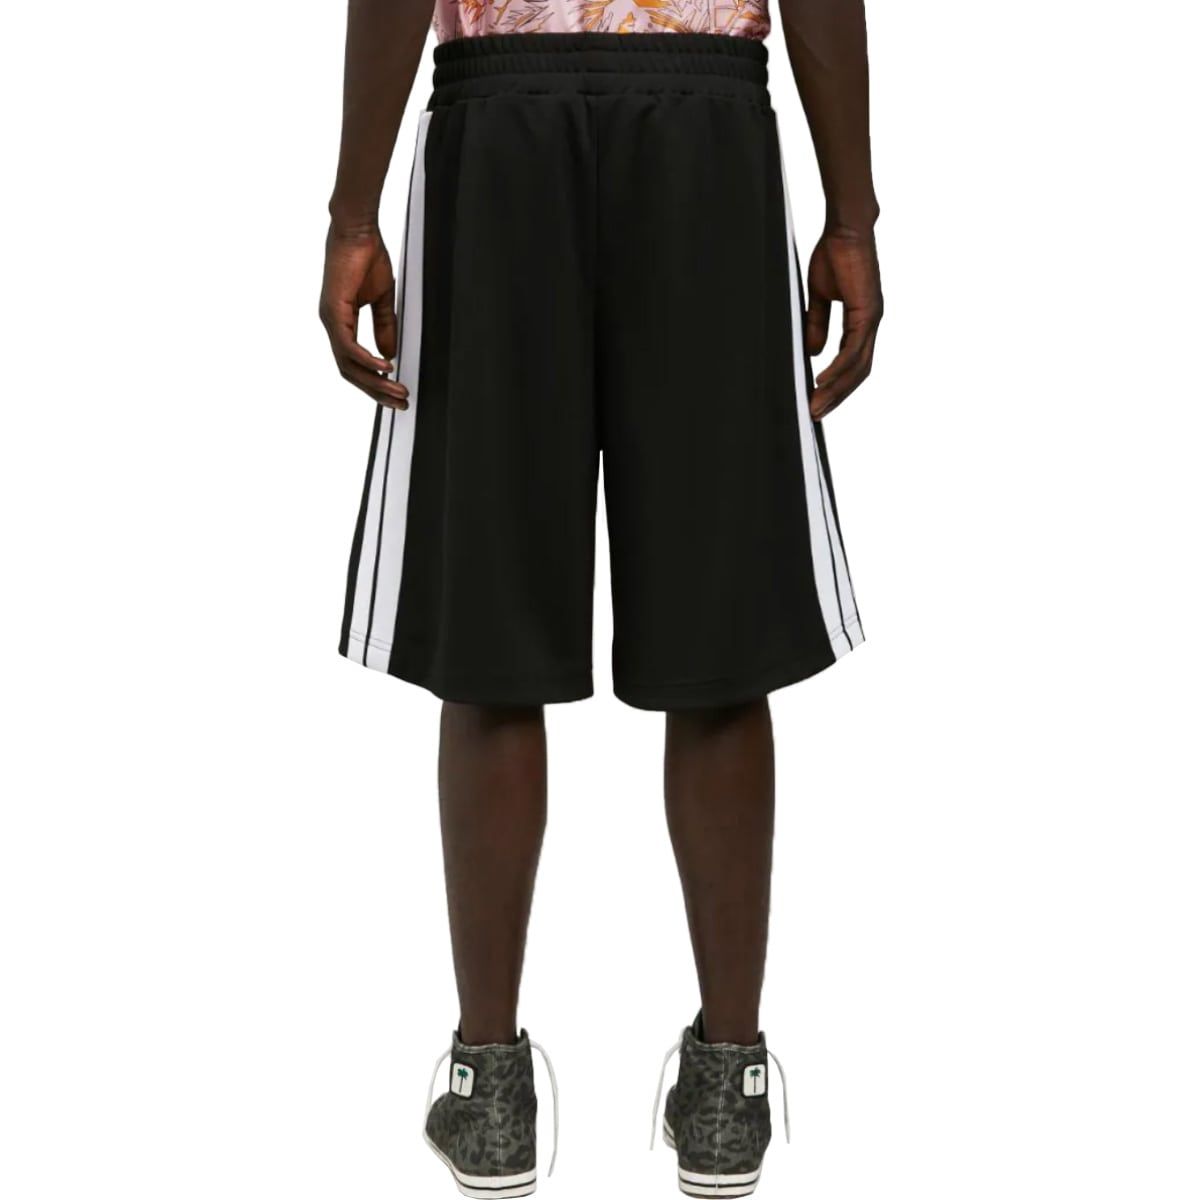 Classic Side-Stripe Track Shorts In Black